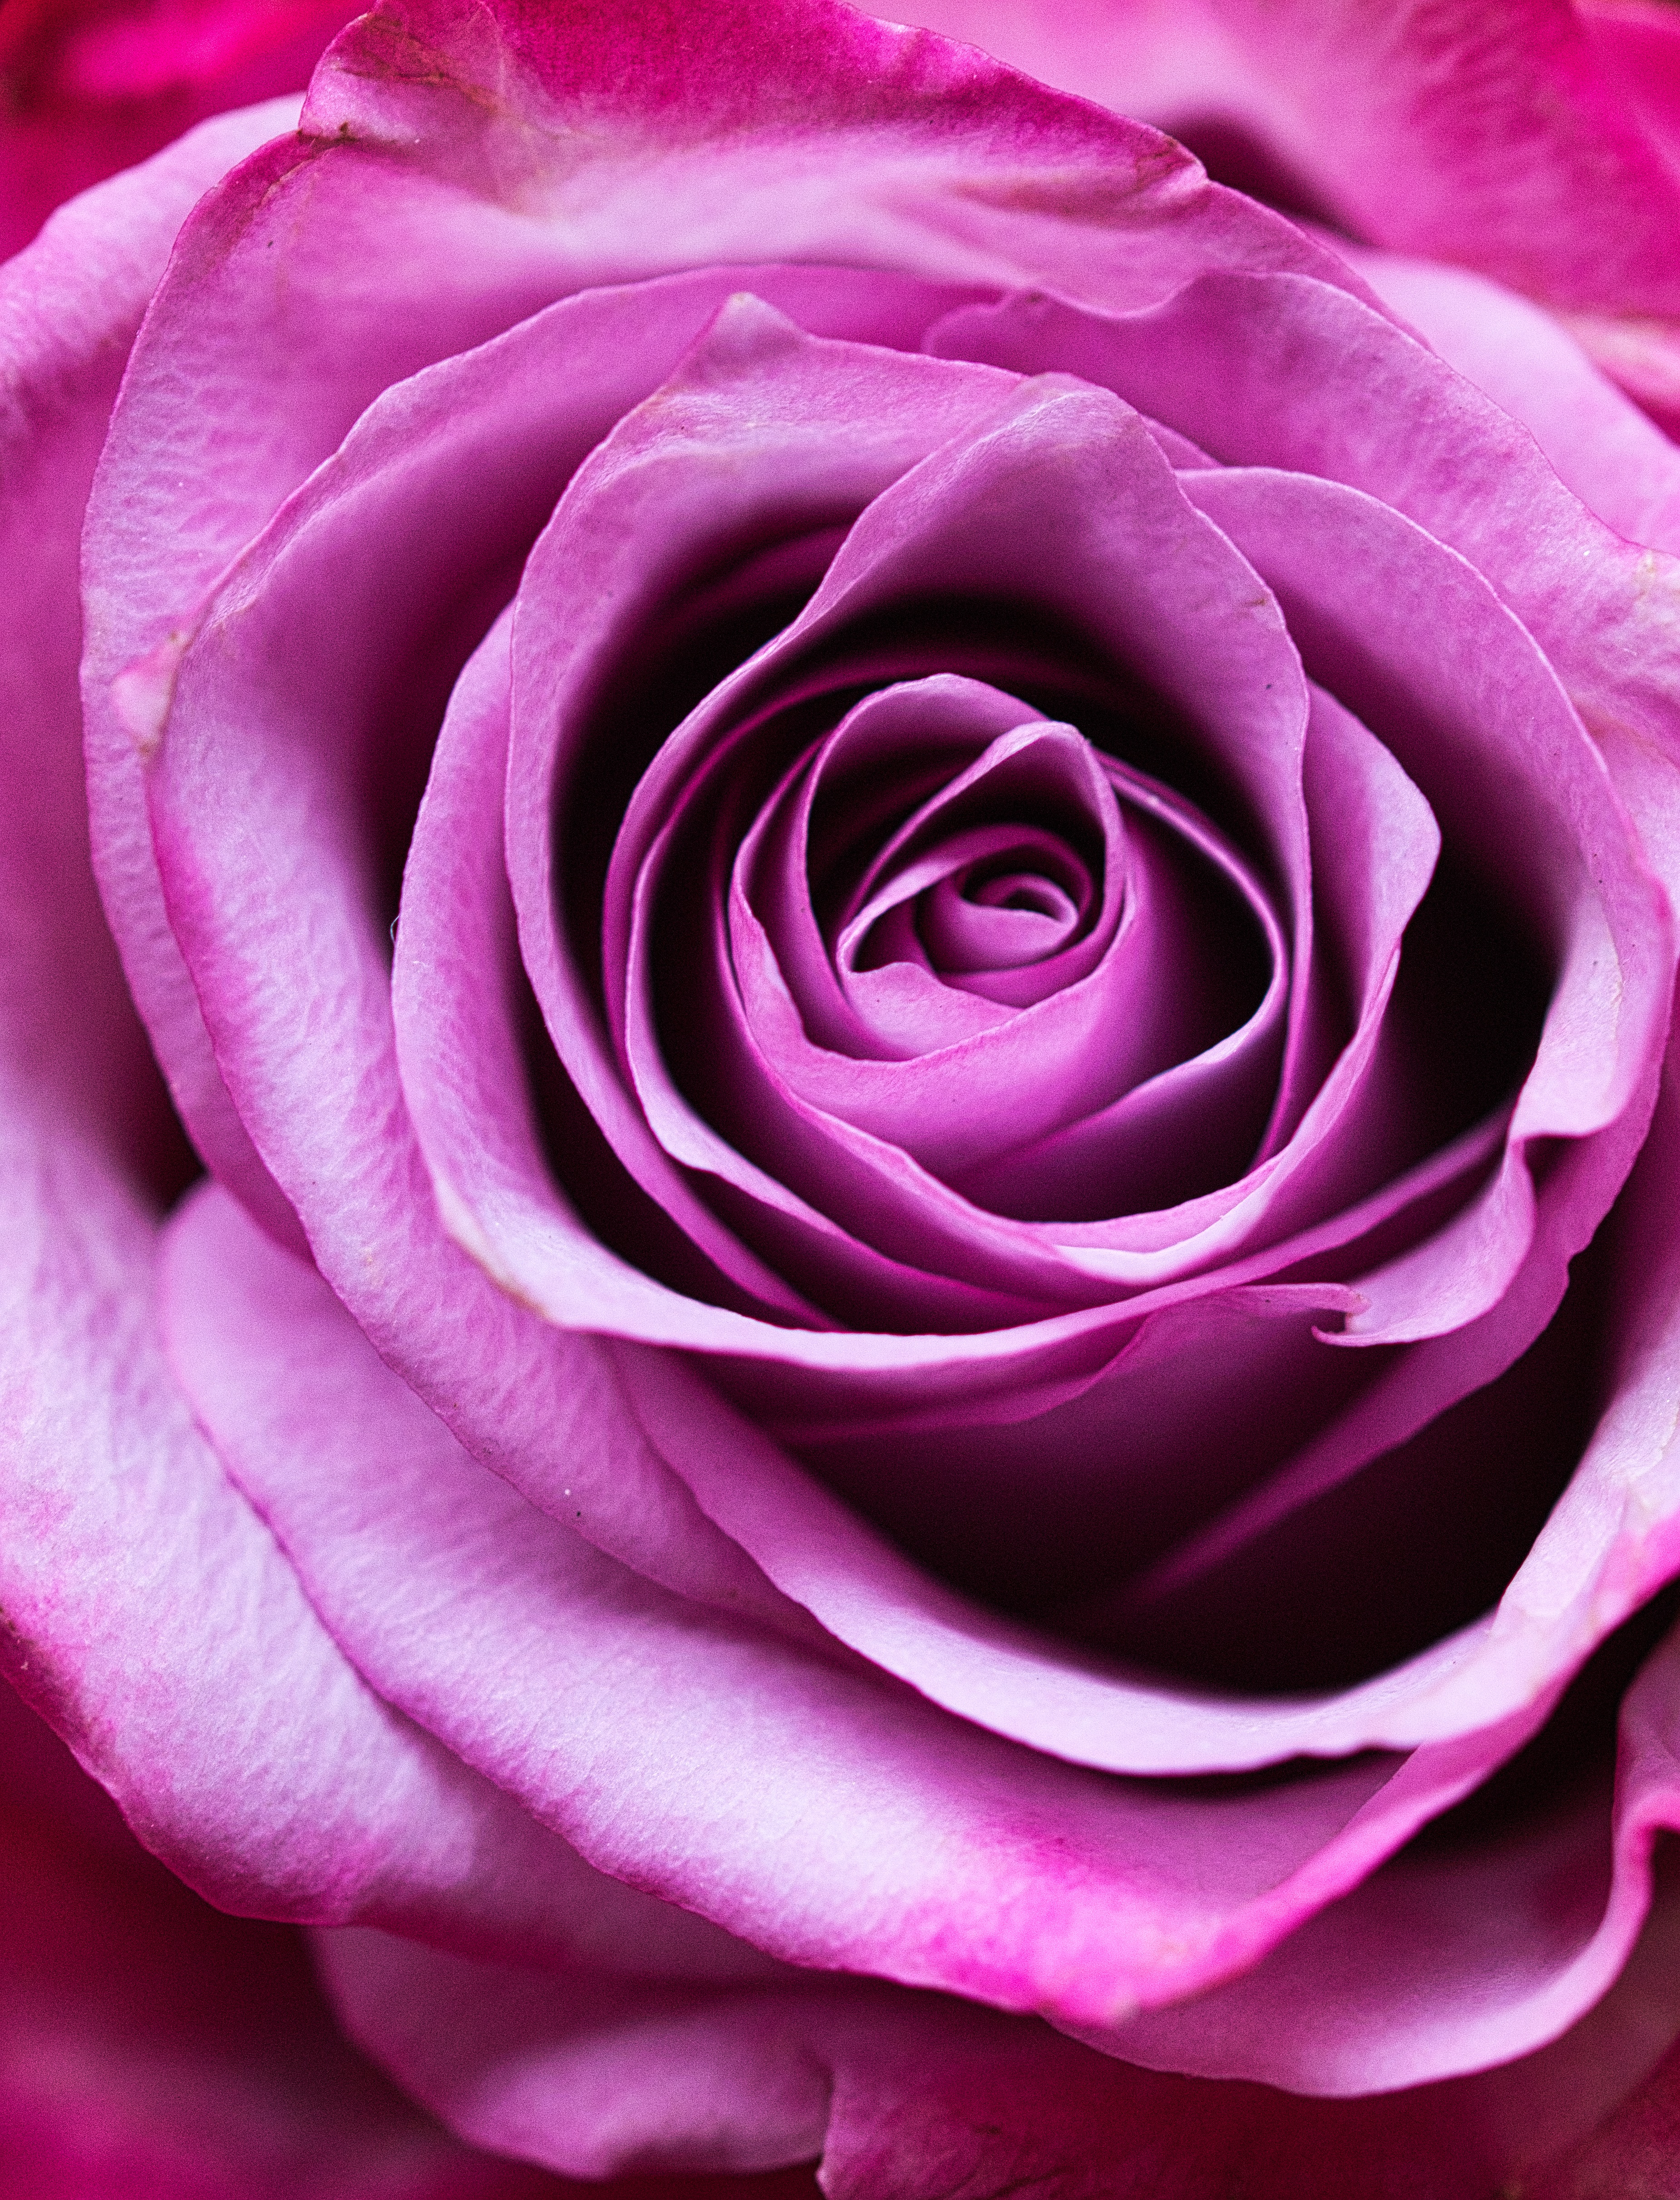 Full HD petals, romance, flowers, pink, flower, rose flower, rose, close up